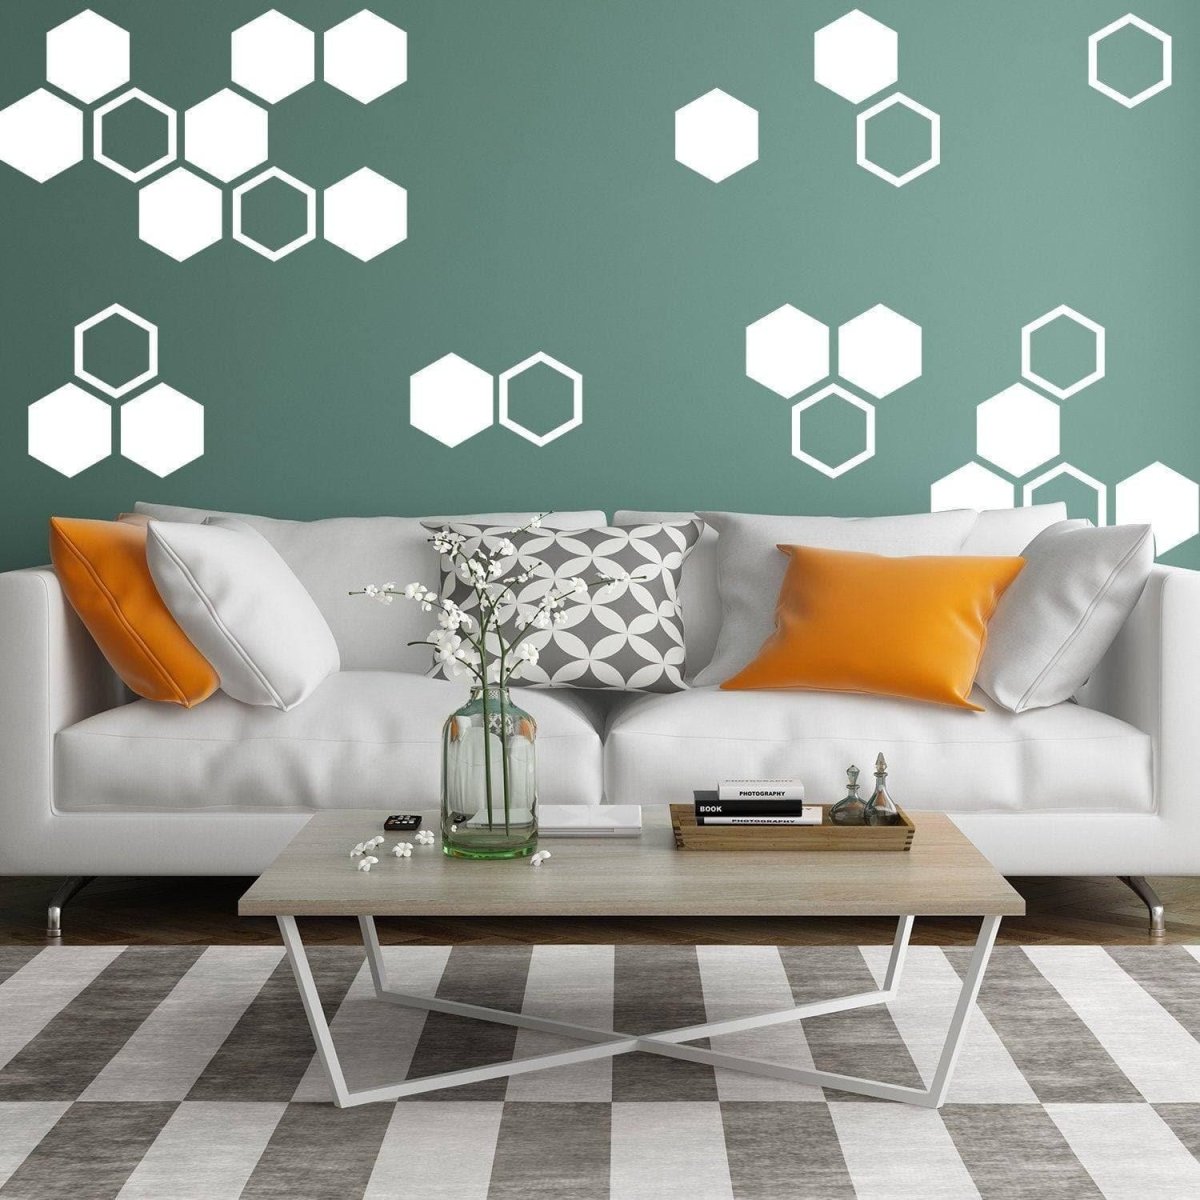 Golden Hexagon Wall Decals - Elegant Honeycomb Stickers for Bedroom and Living Room - Decords